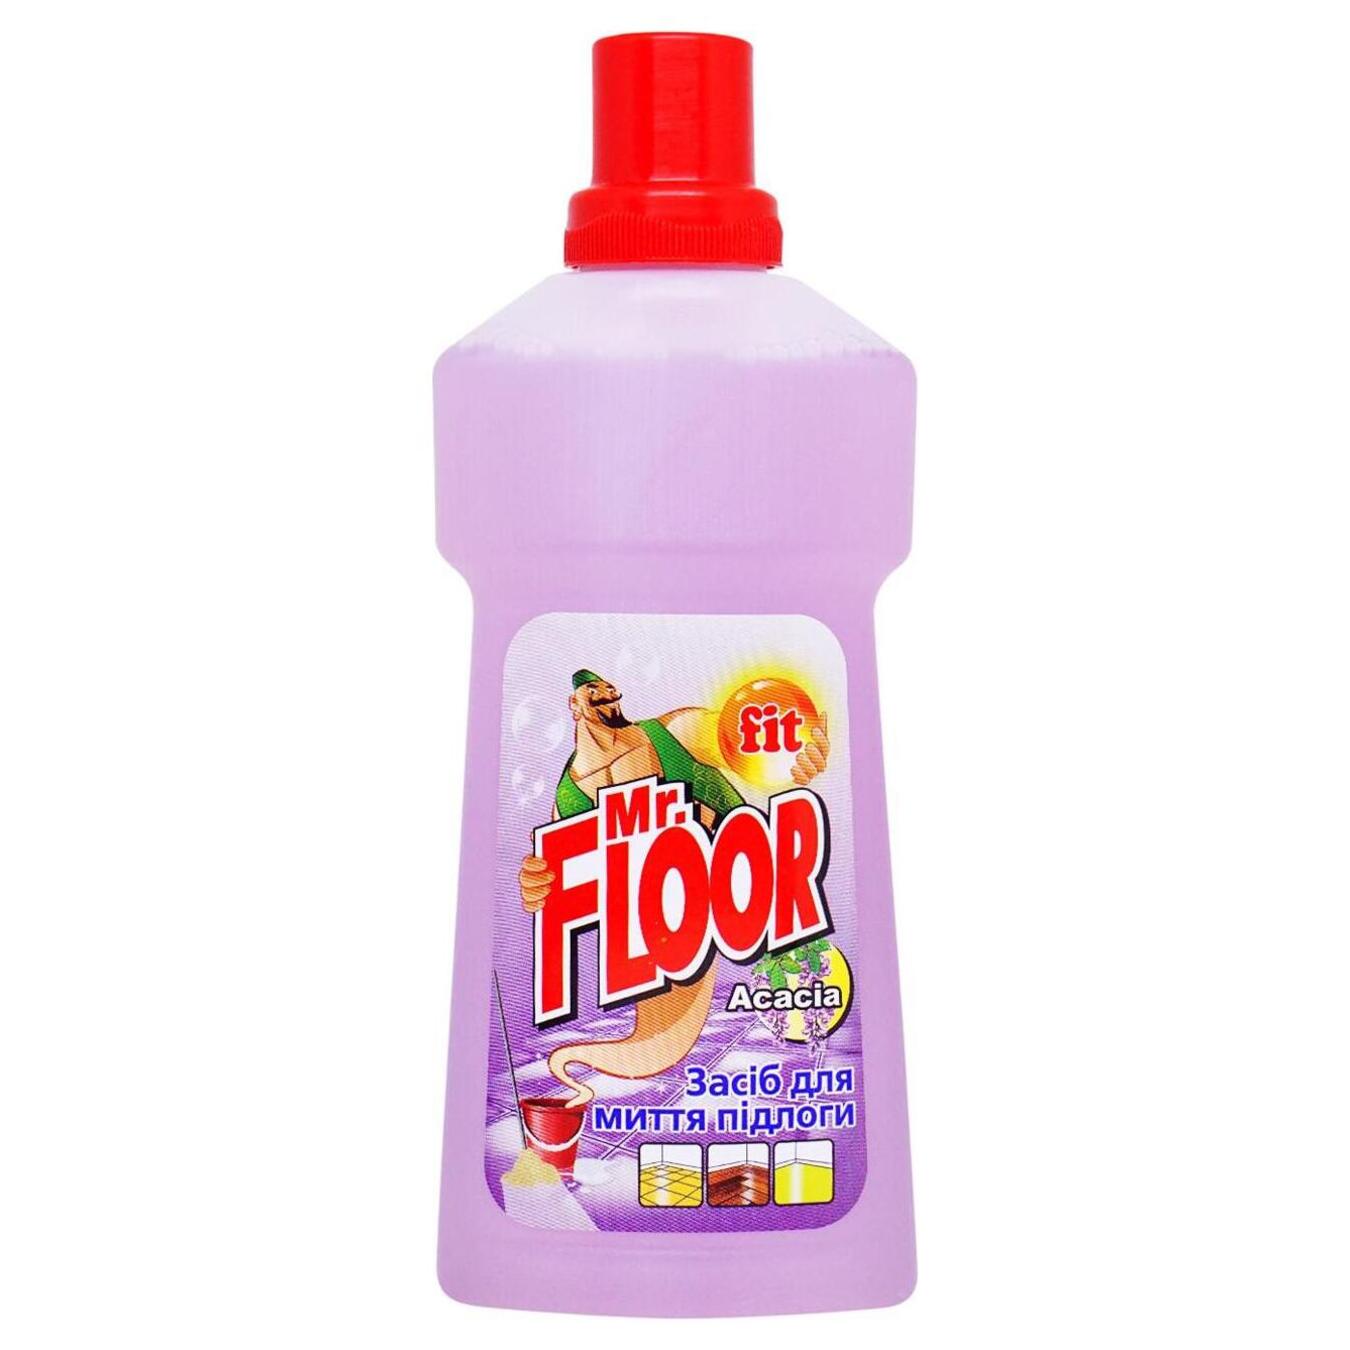 Fit Mr.Floor Acacia floor cleaner 500ml